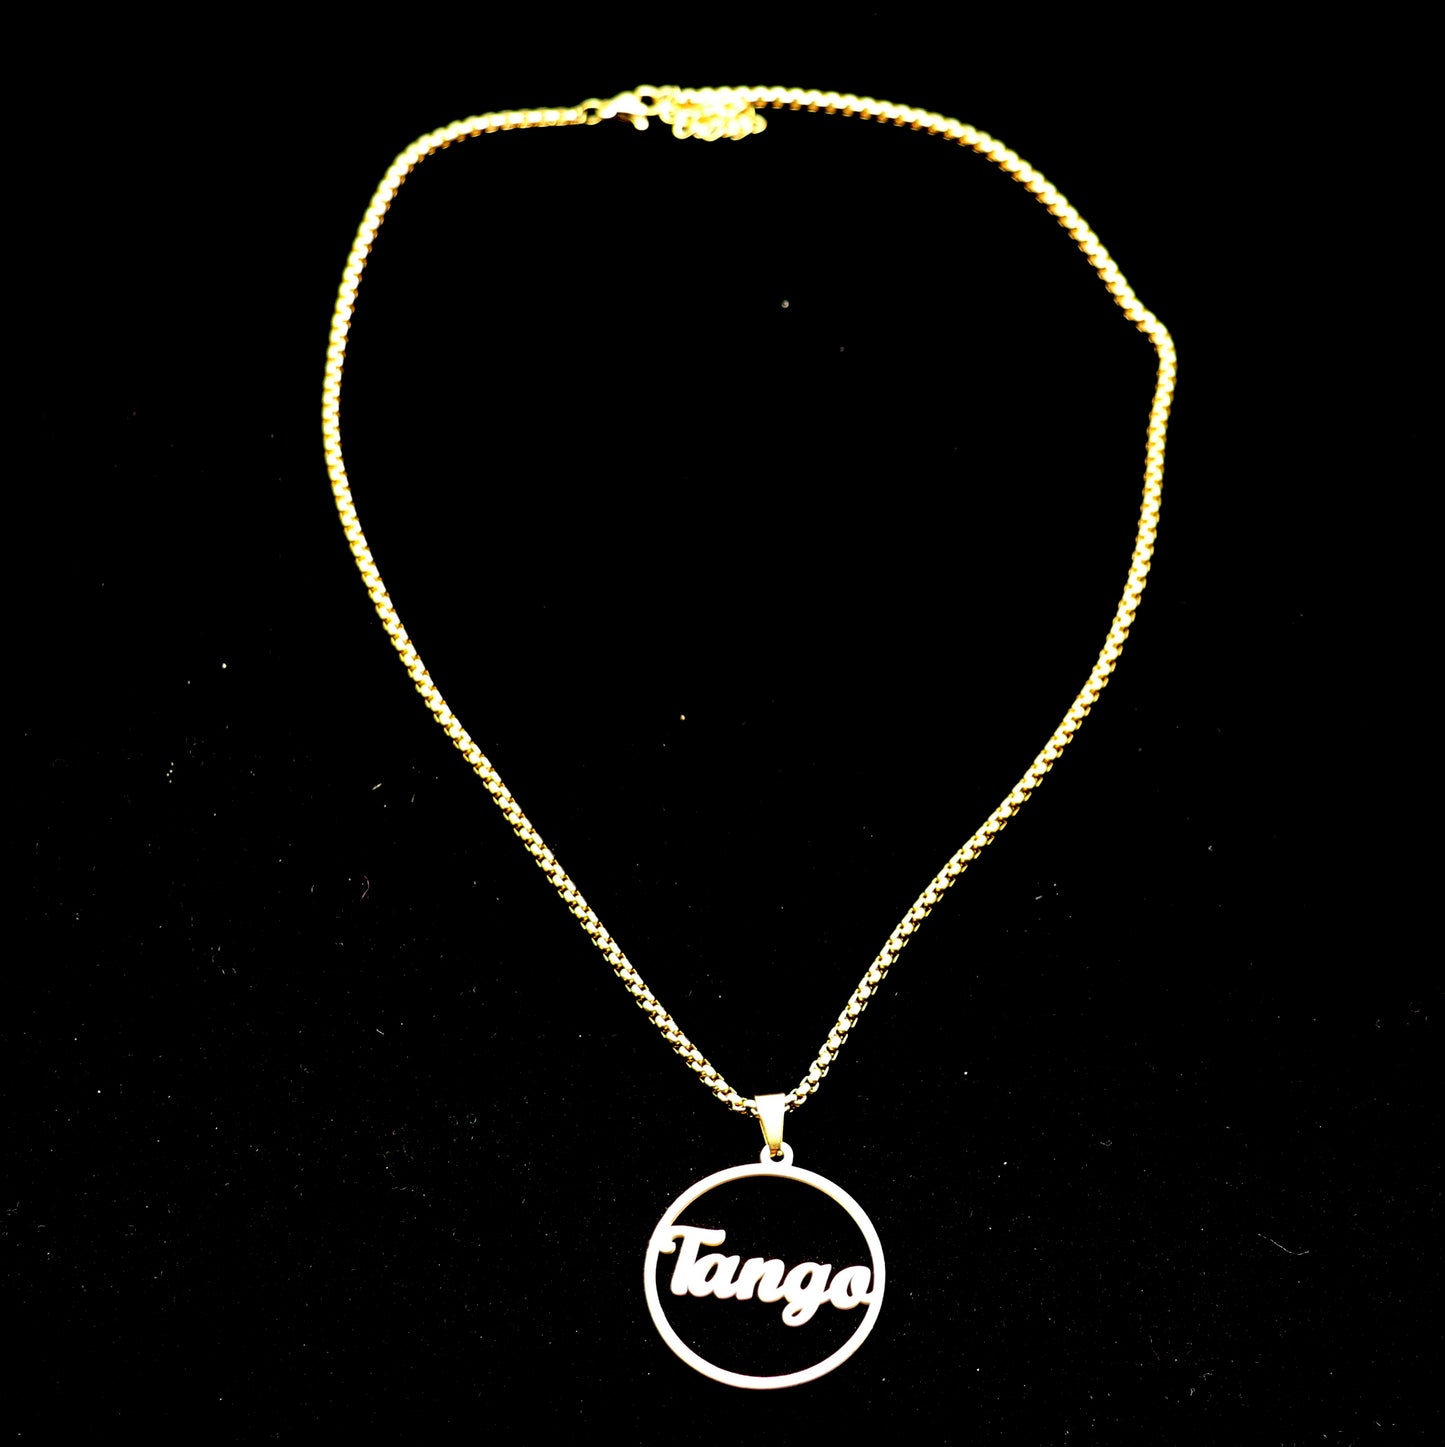 Golden "tango" pendant